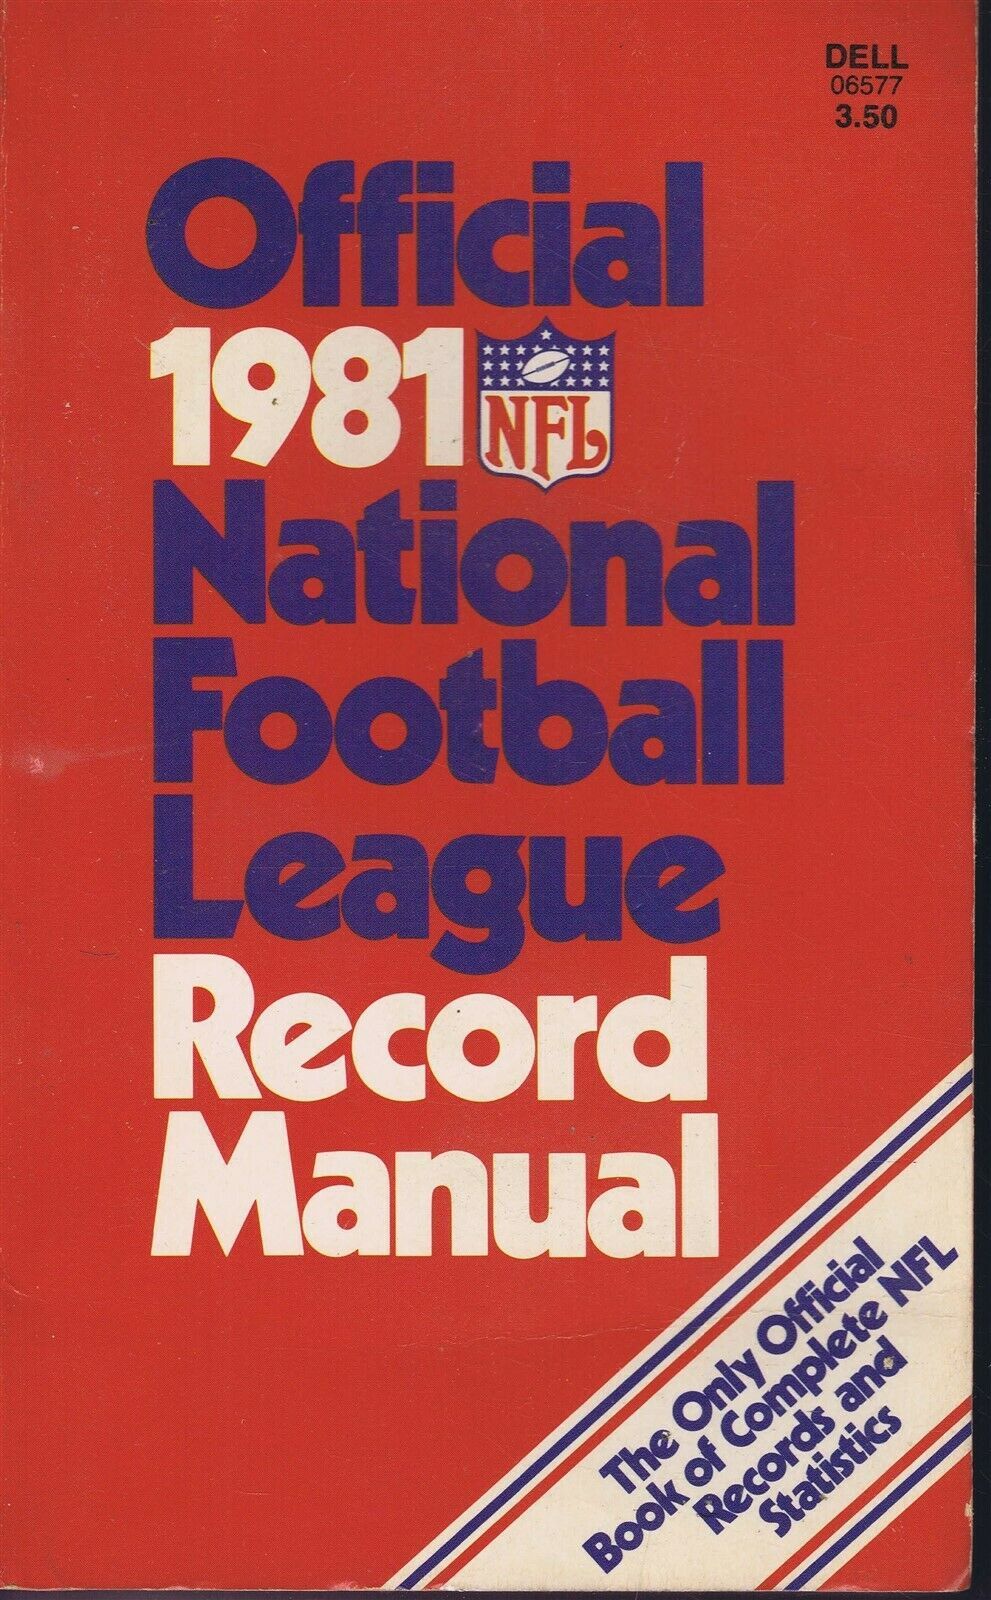 Primary image for ORIGINAL Vintage 1981 NFL Record Manual